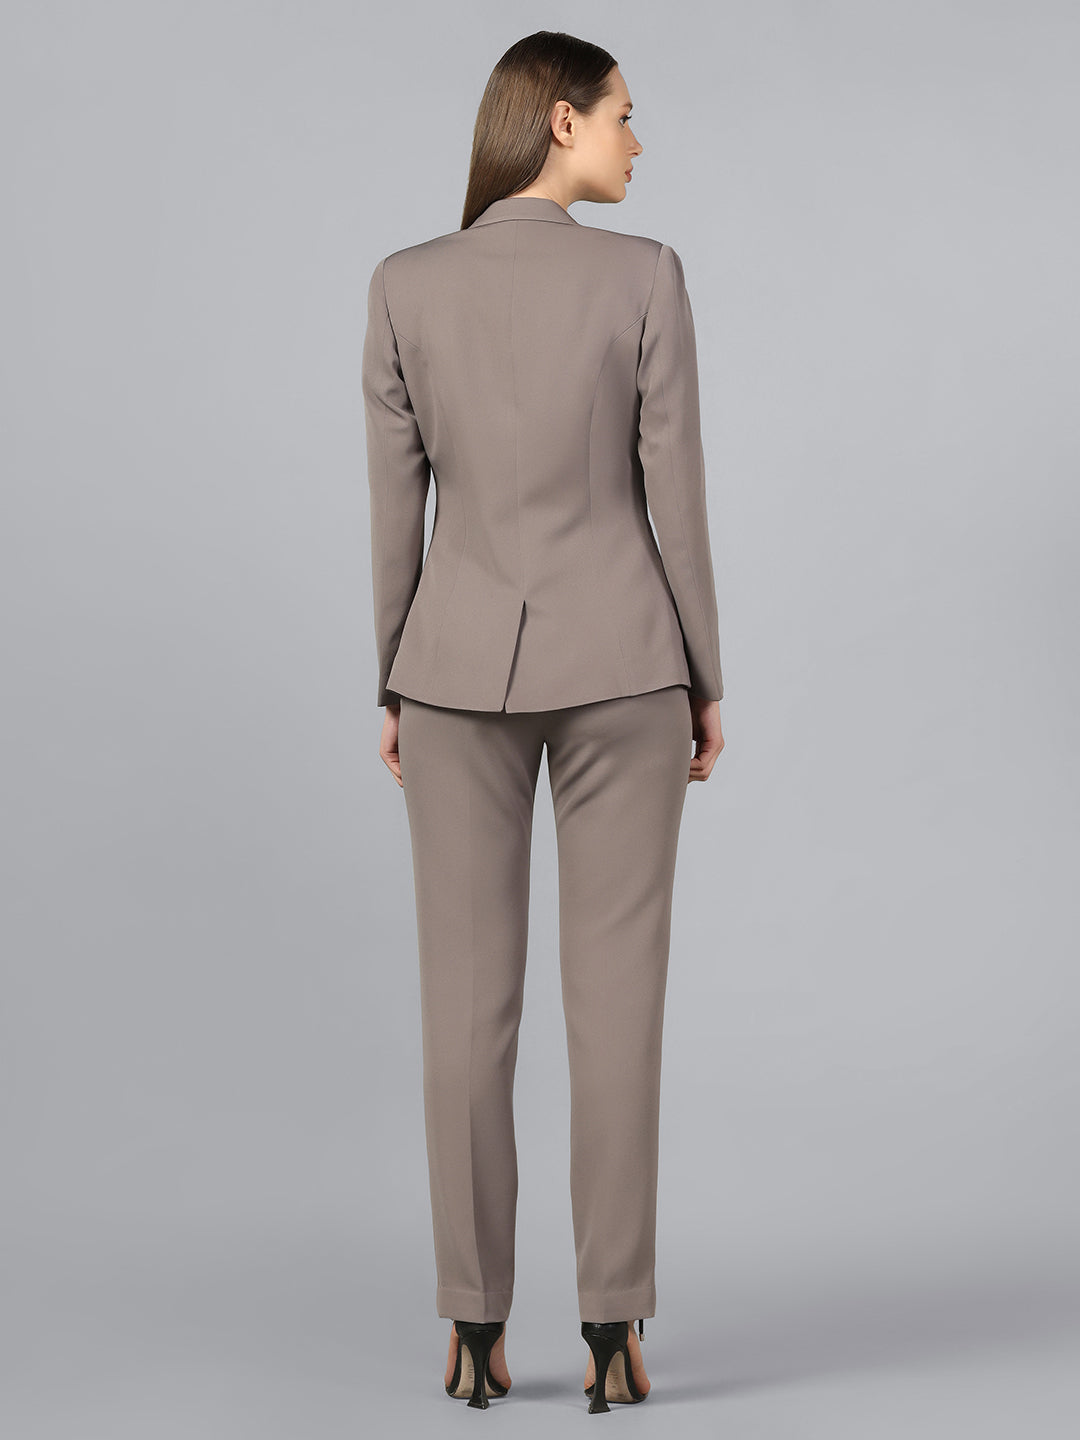 Grey Viscose Stretch Pant Suit